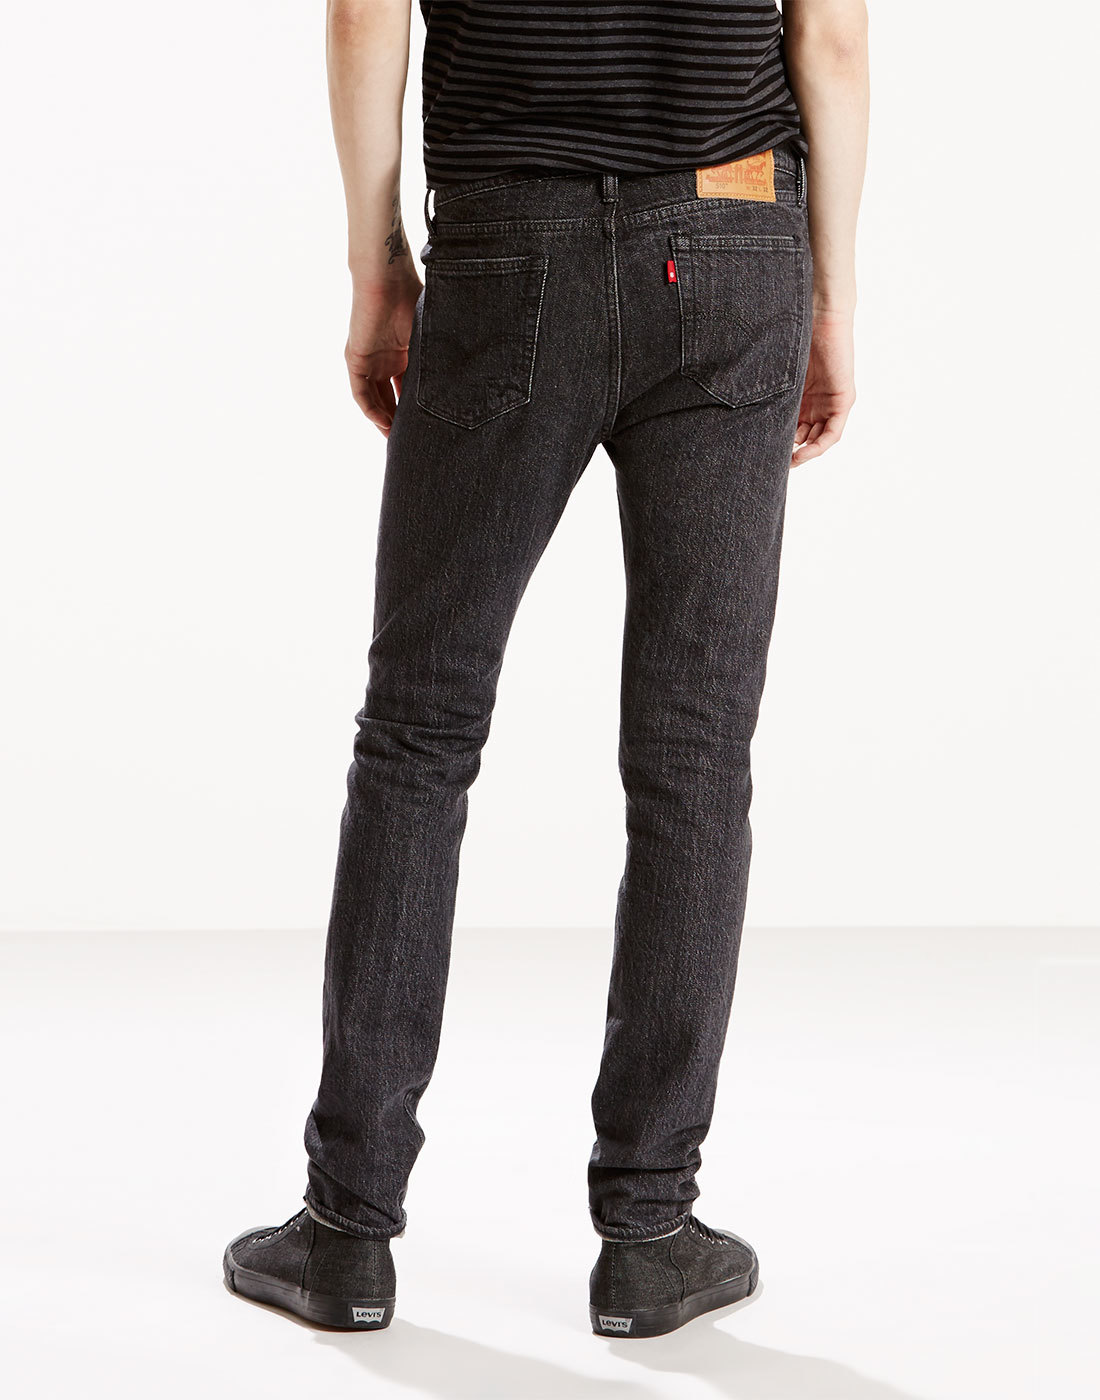 LEVI'S® 510 Retro Mod Skinny Mens Denim Jeans Northstar Black